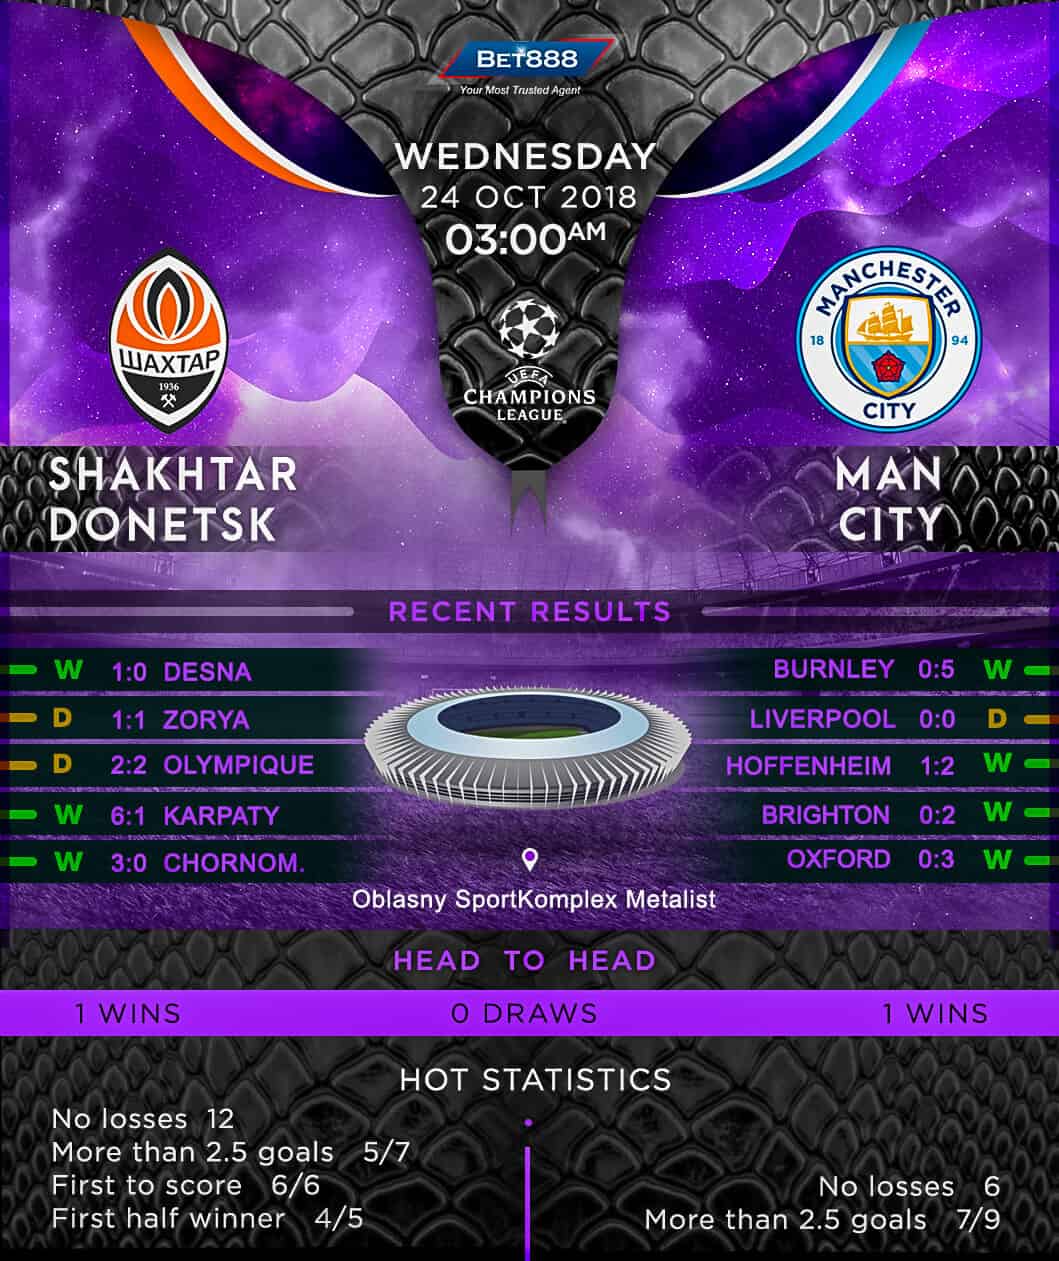 Shakhtar Donetsk vs Manchester City 24/10/18